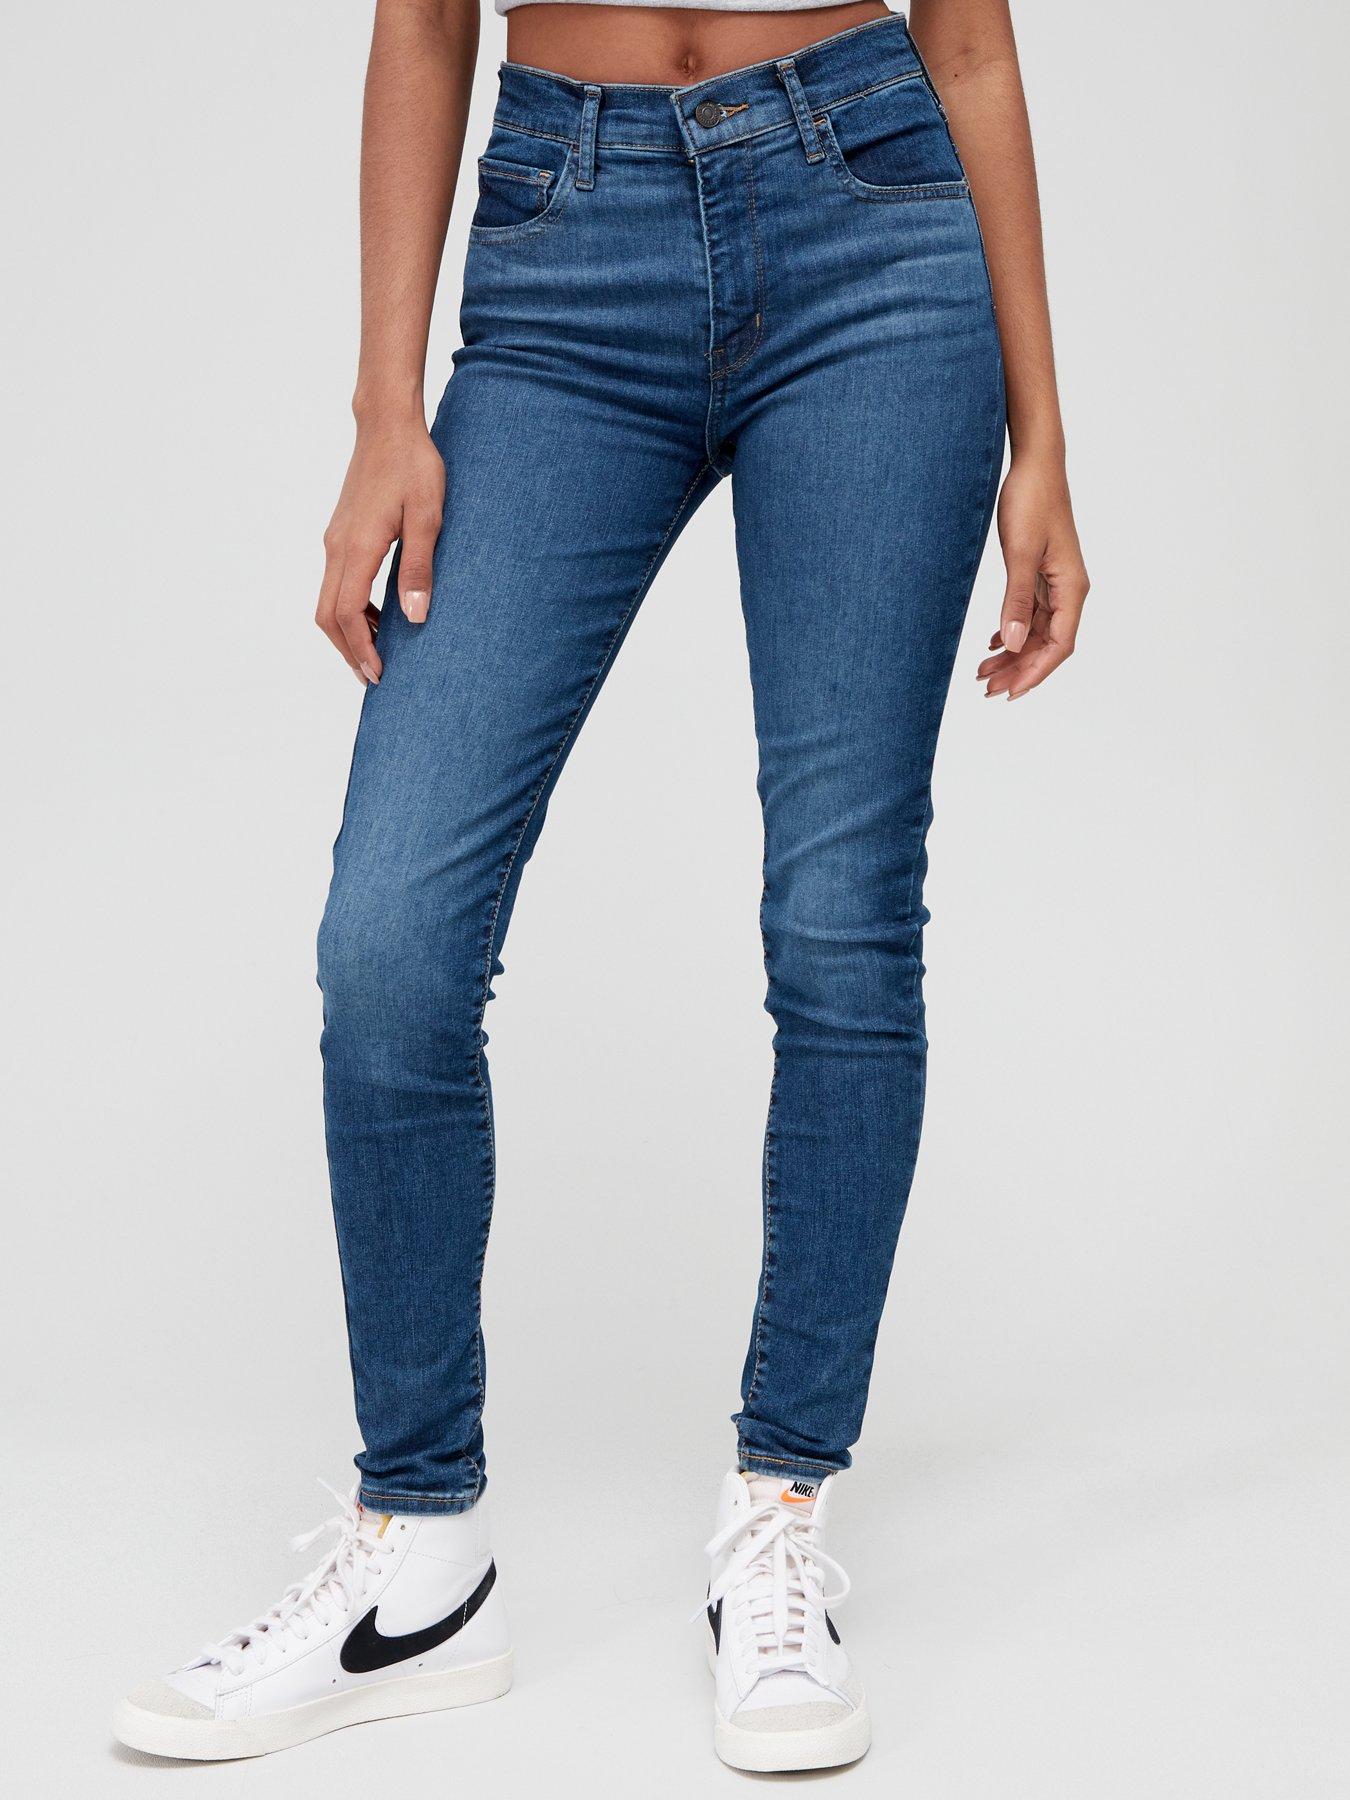 discount 89% Mango Jeggings & Skinny & Slim Navy Blue 34                  EU WOMEN FASHION Jeans Basic 